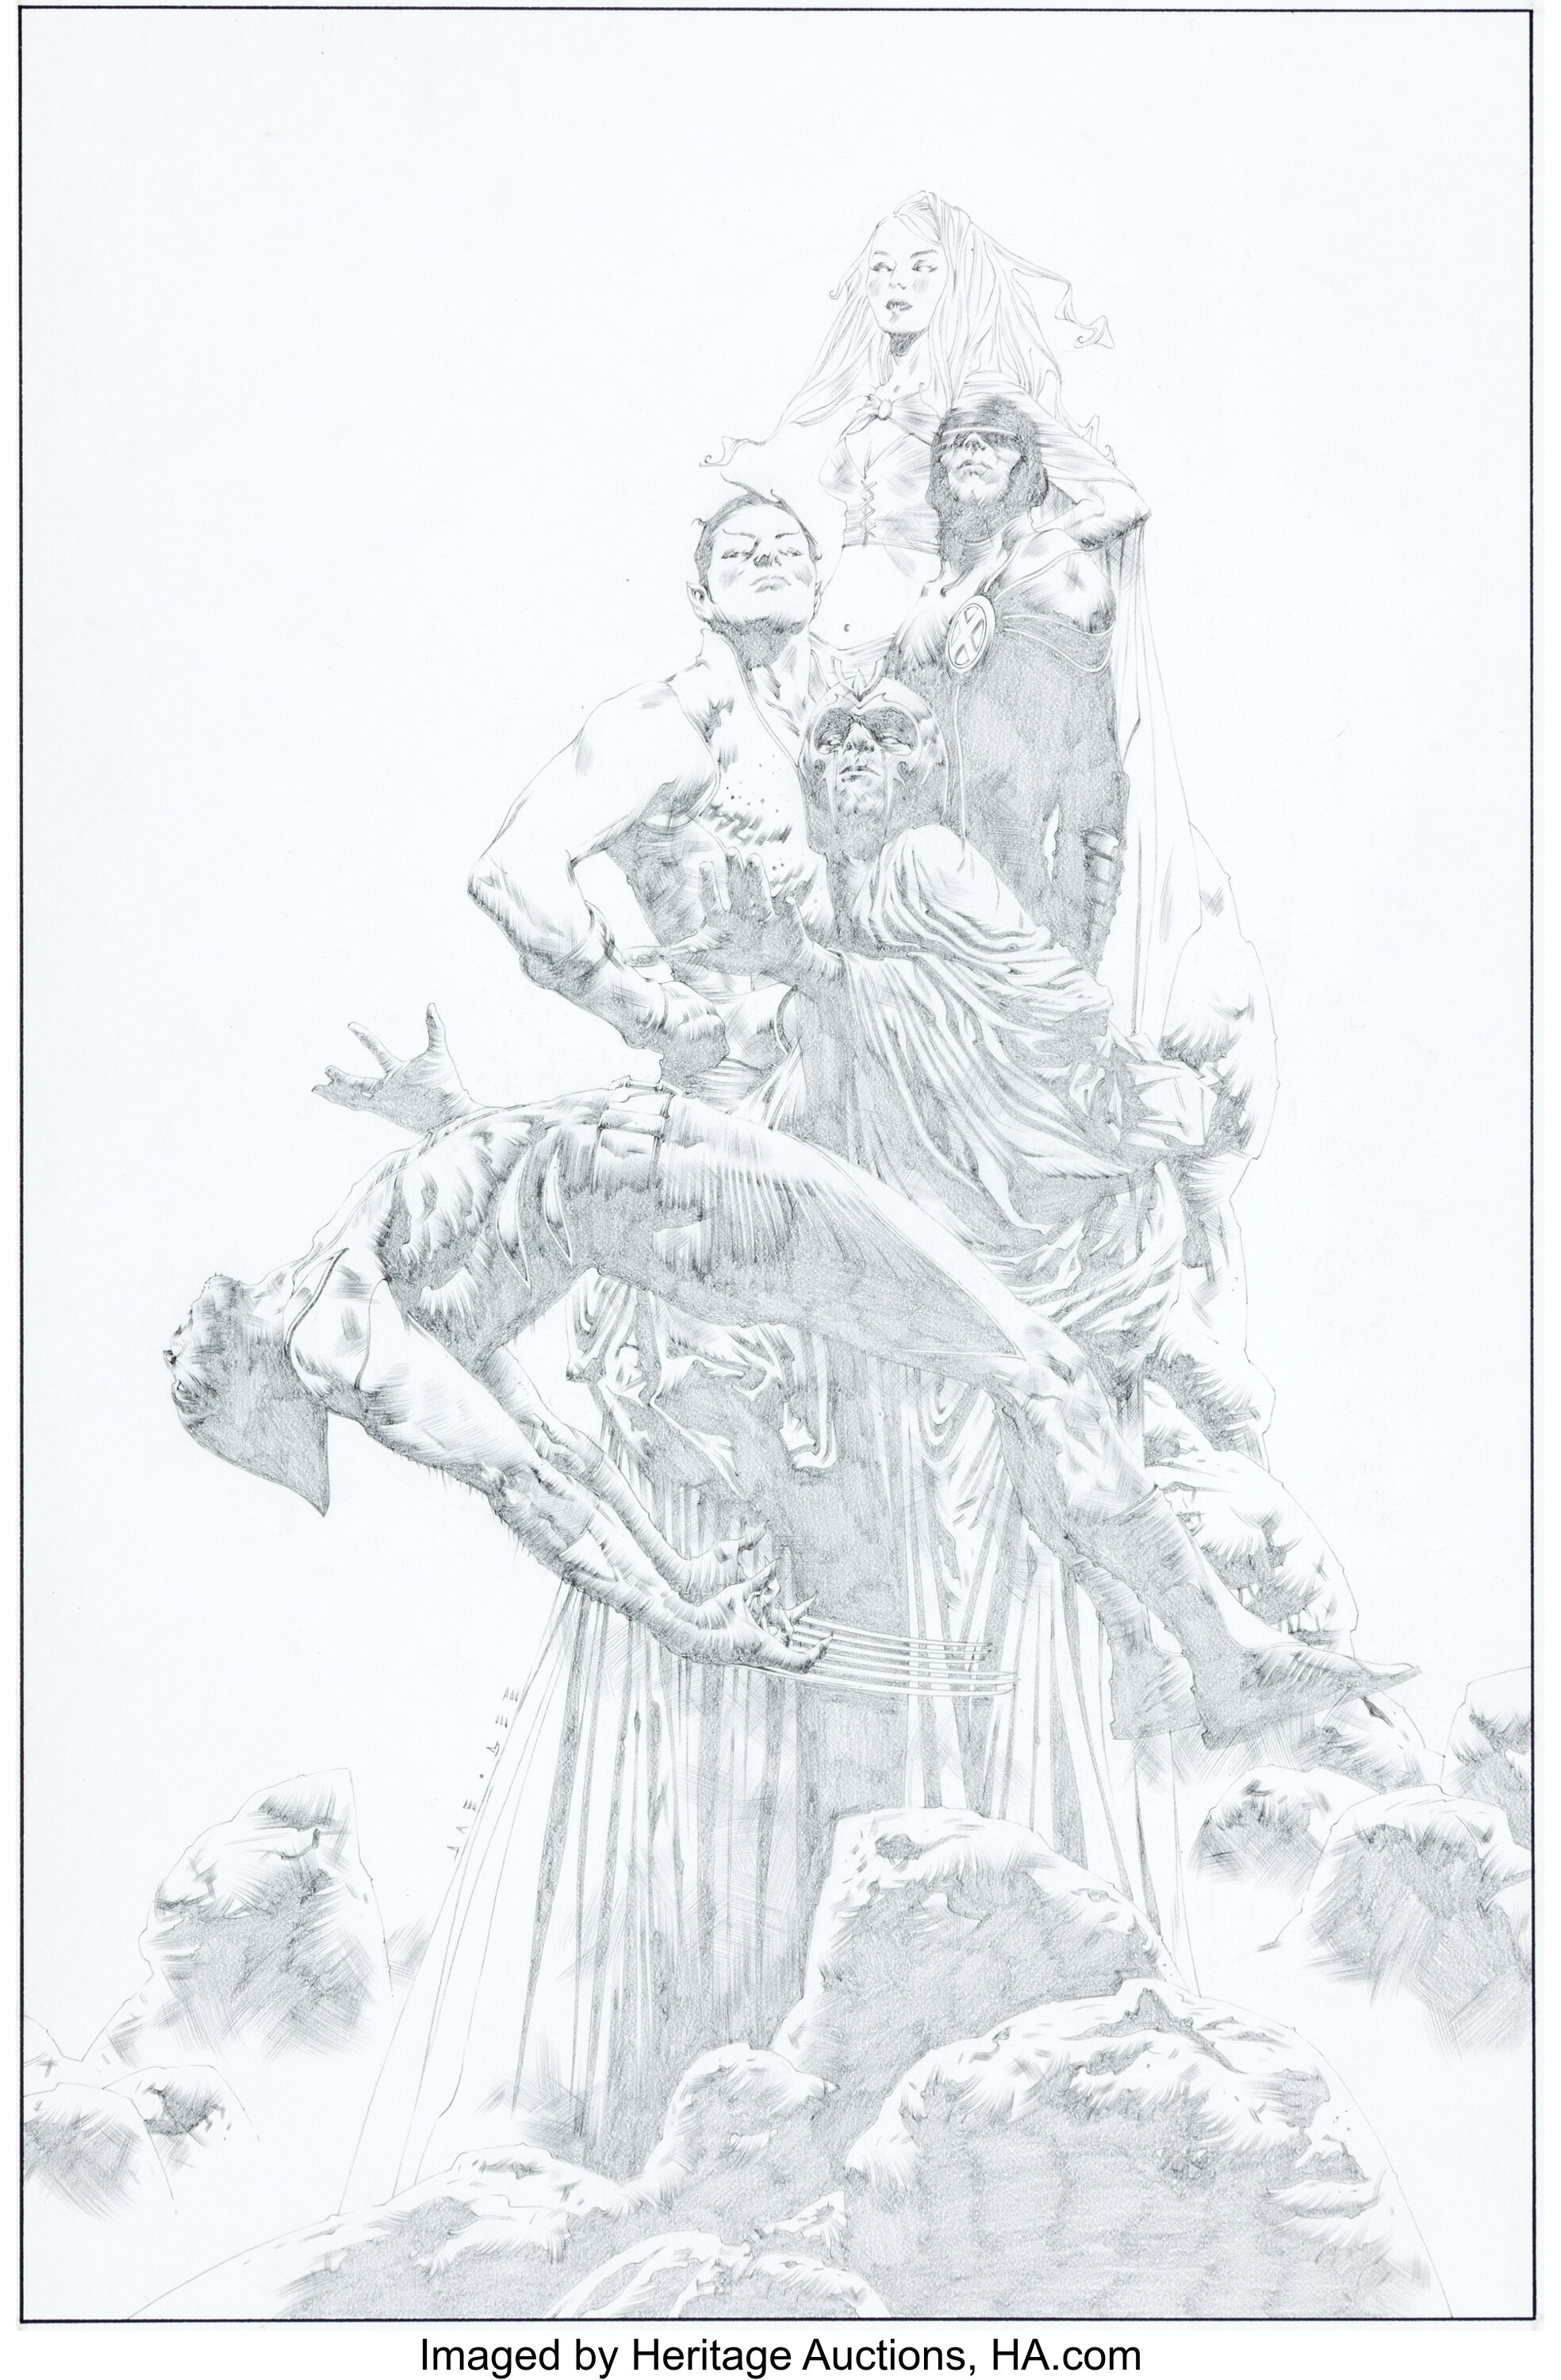 Jae Lee Wolverine #6 Pencil Cover Illustration Original Art | Lot #92236 |  Heritage Auctions